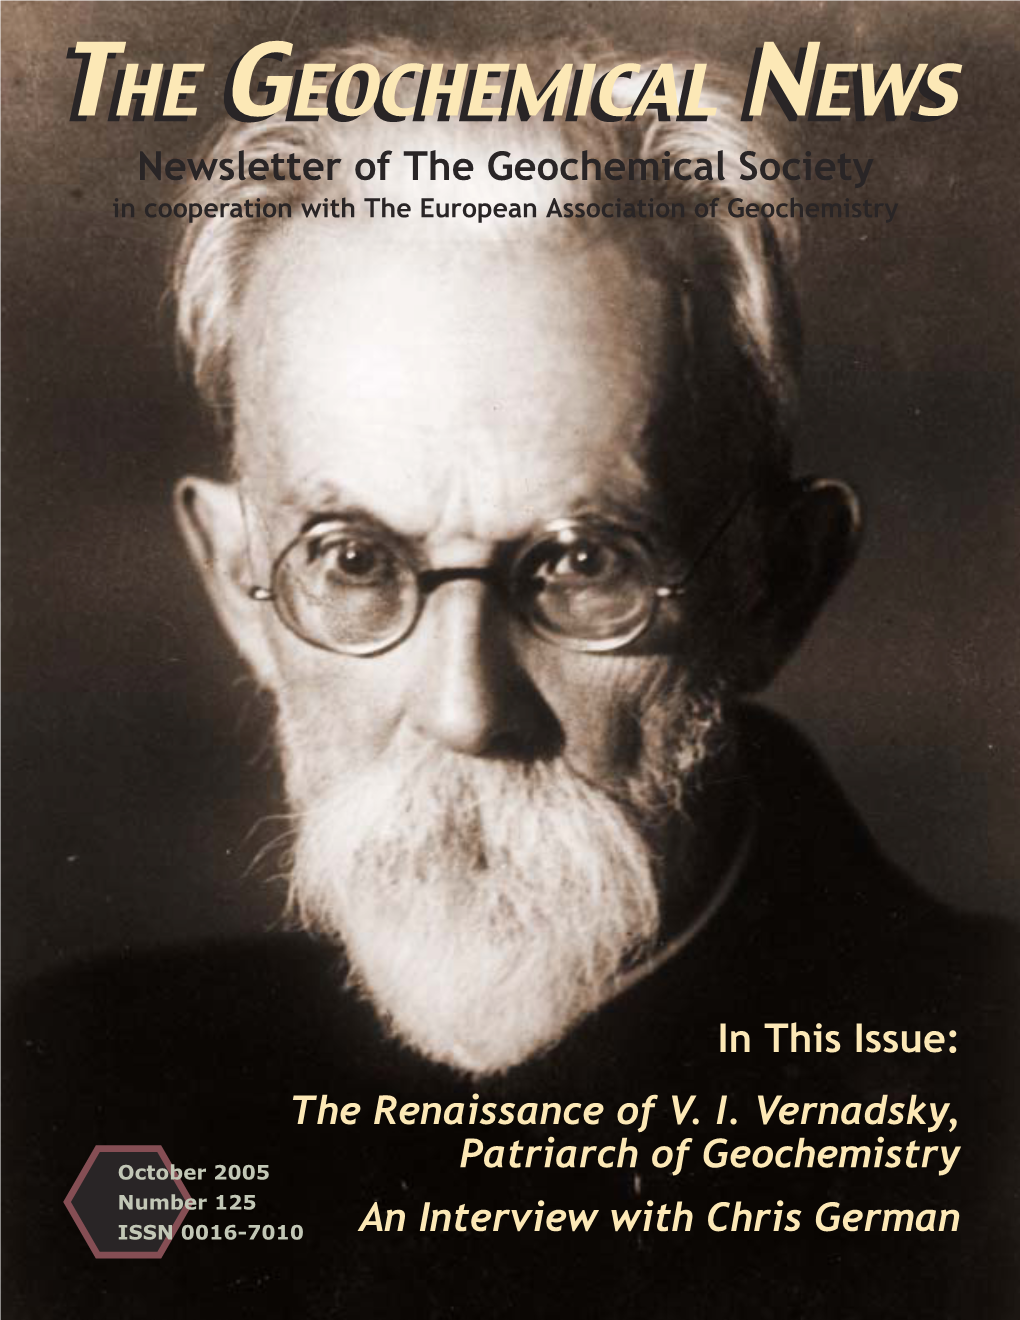 The Geochemical News the Renaissance of V.I